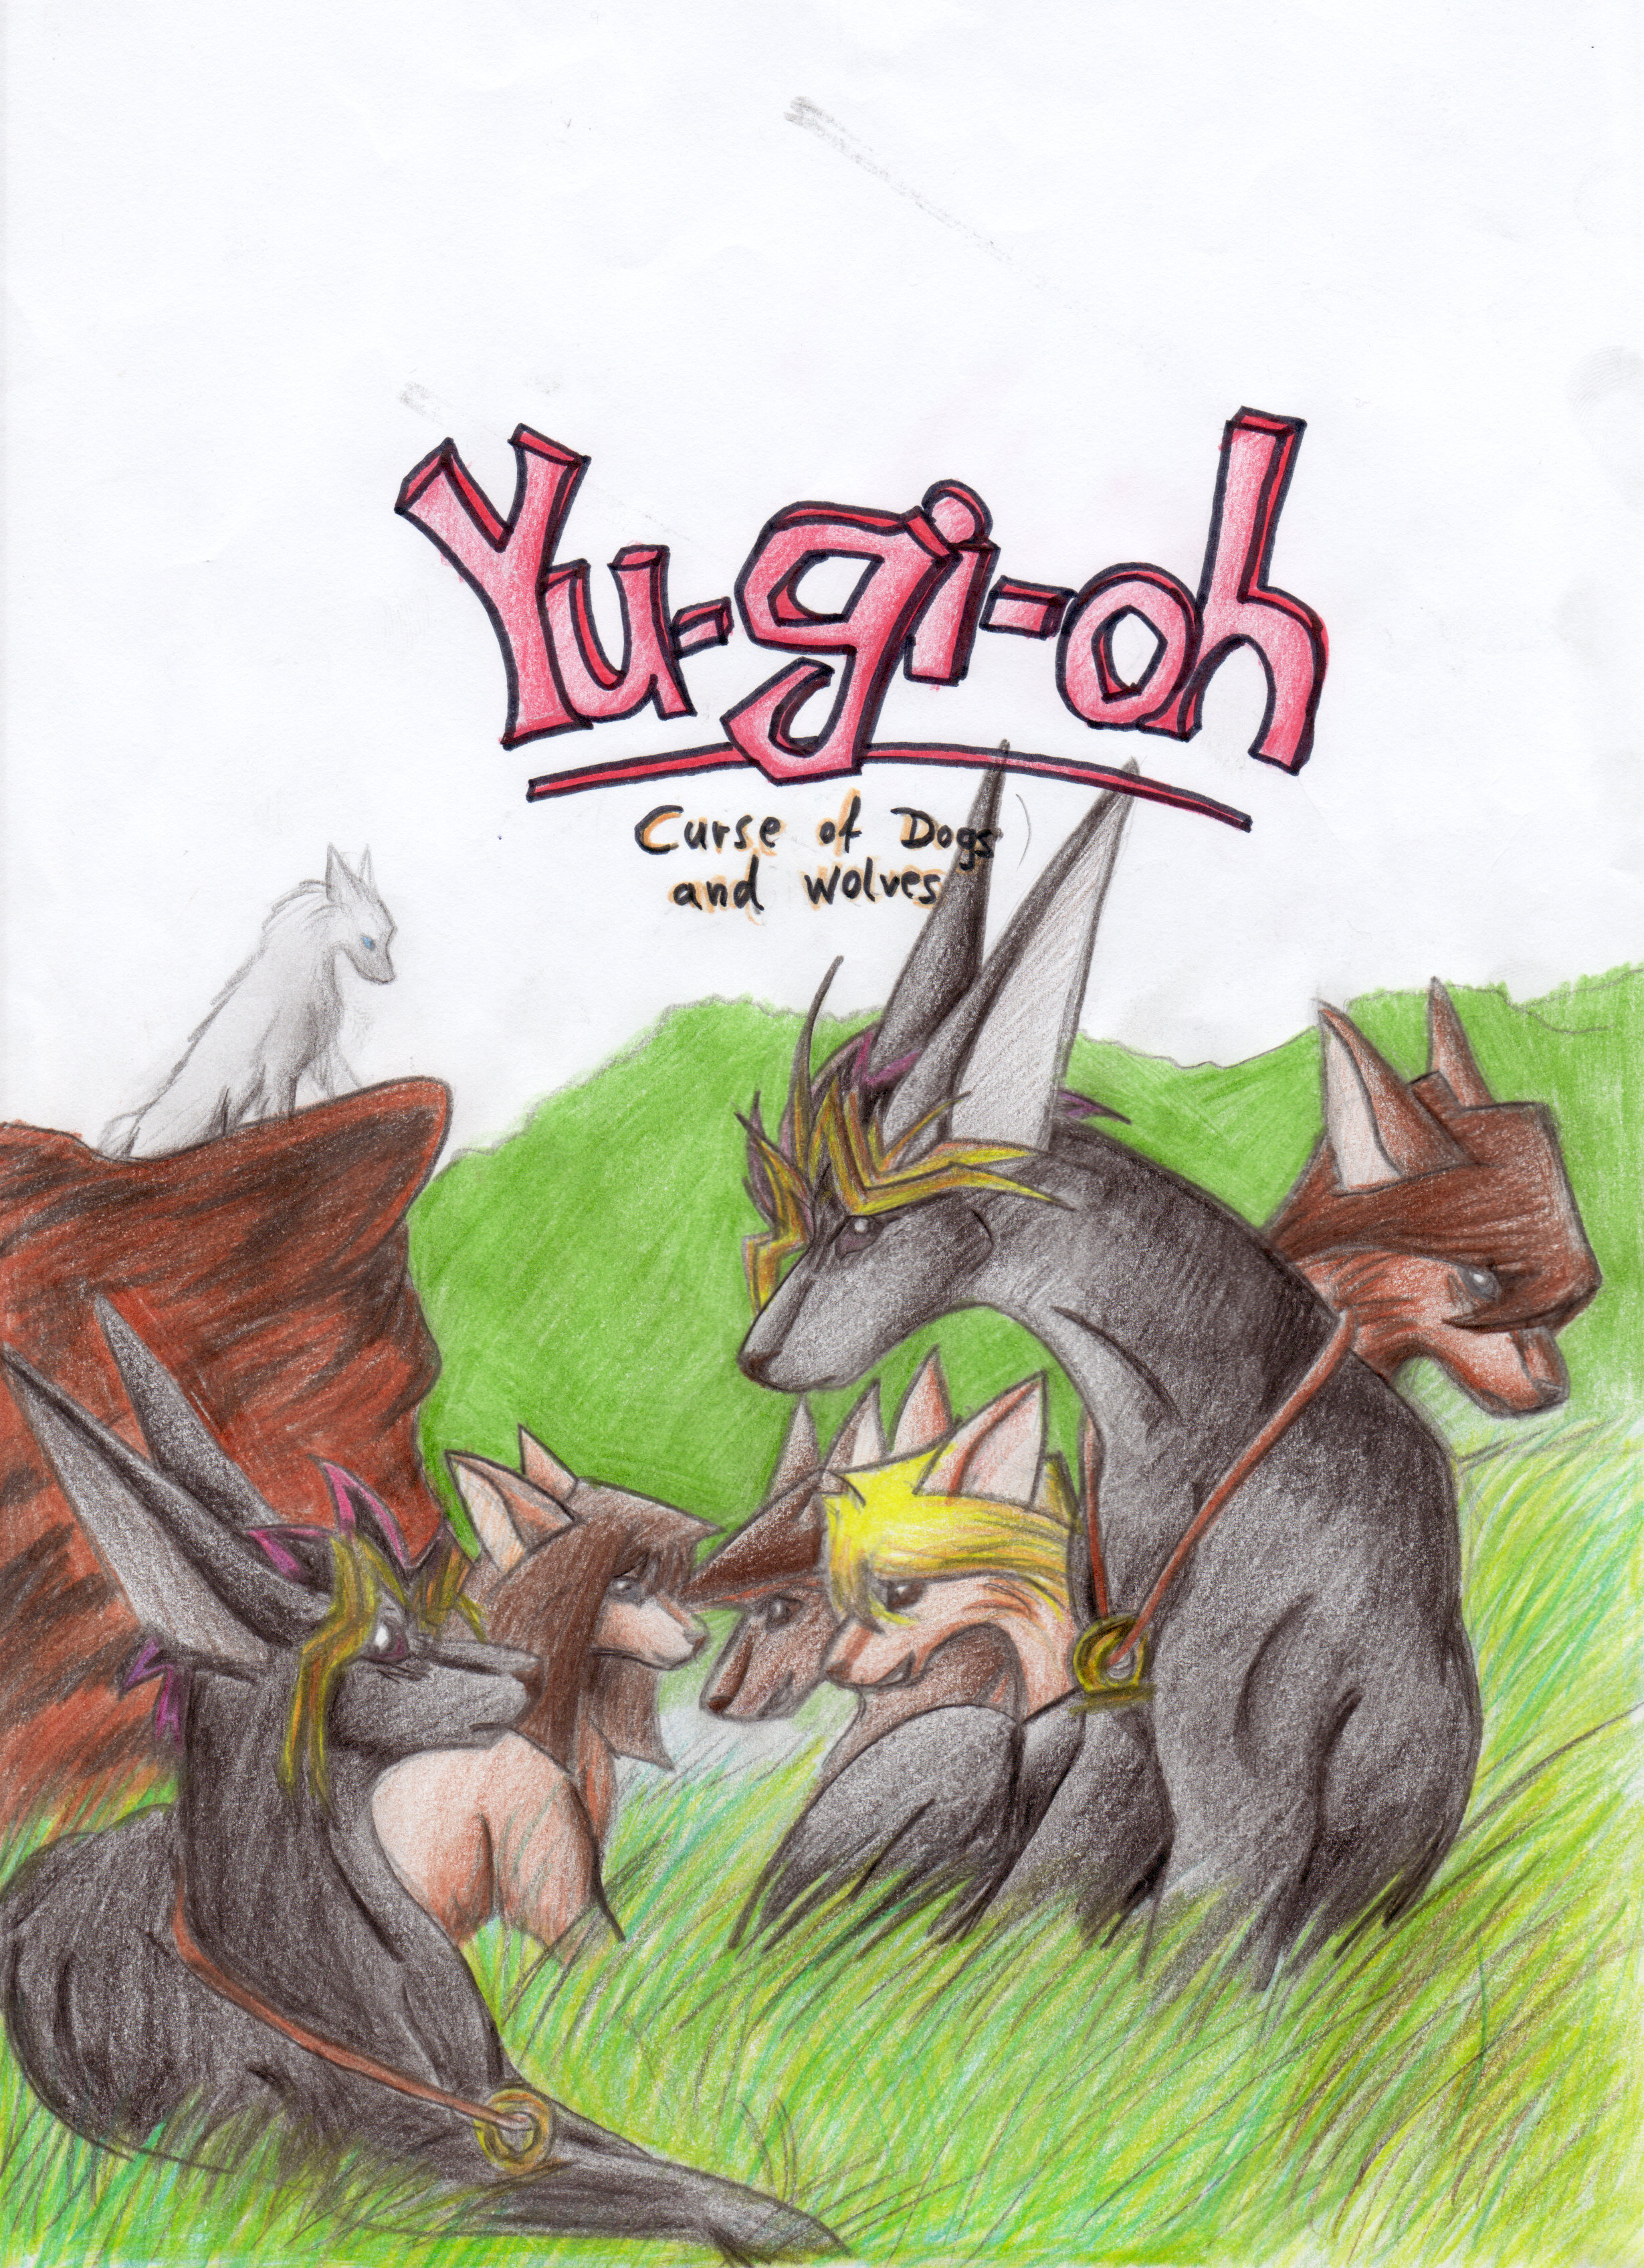 yugioh Cover by TheWolfsgirl90